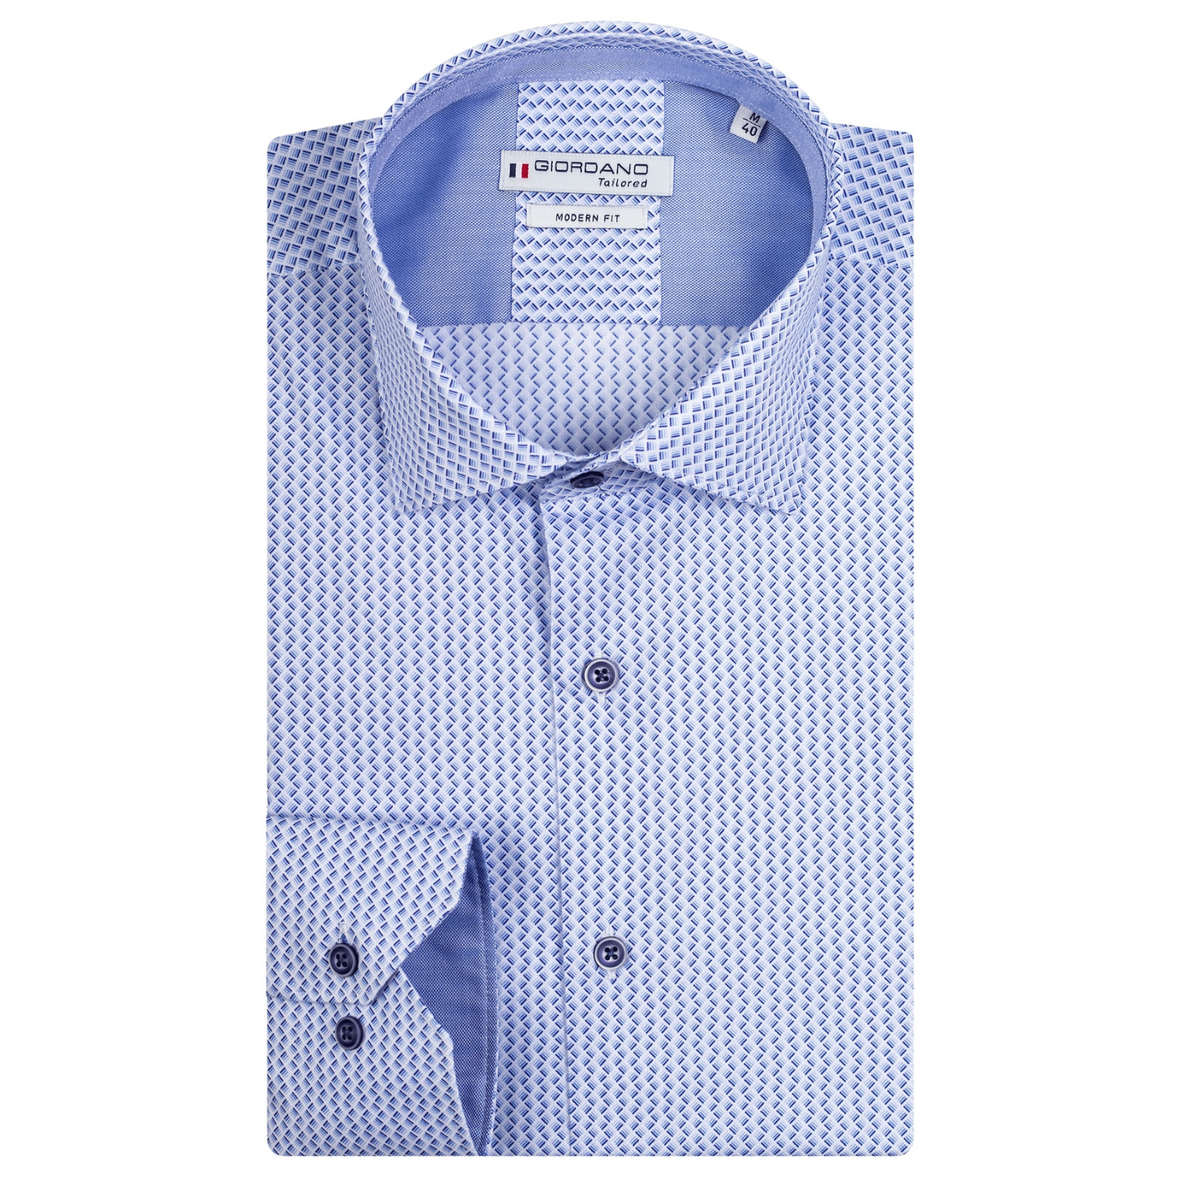 Giordano Diamond Print Long Sleeve Shirt